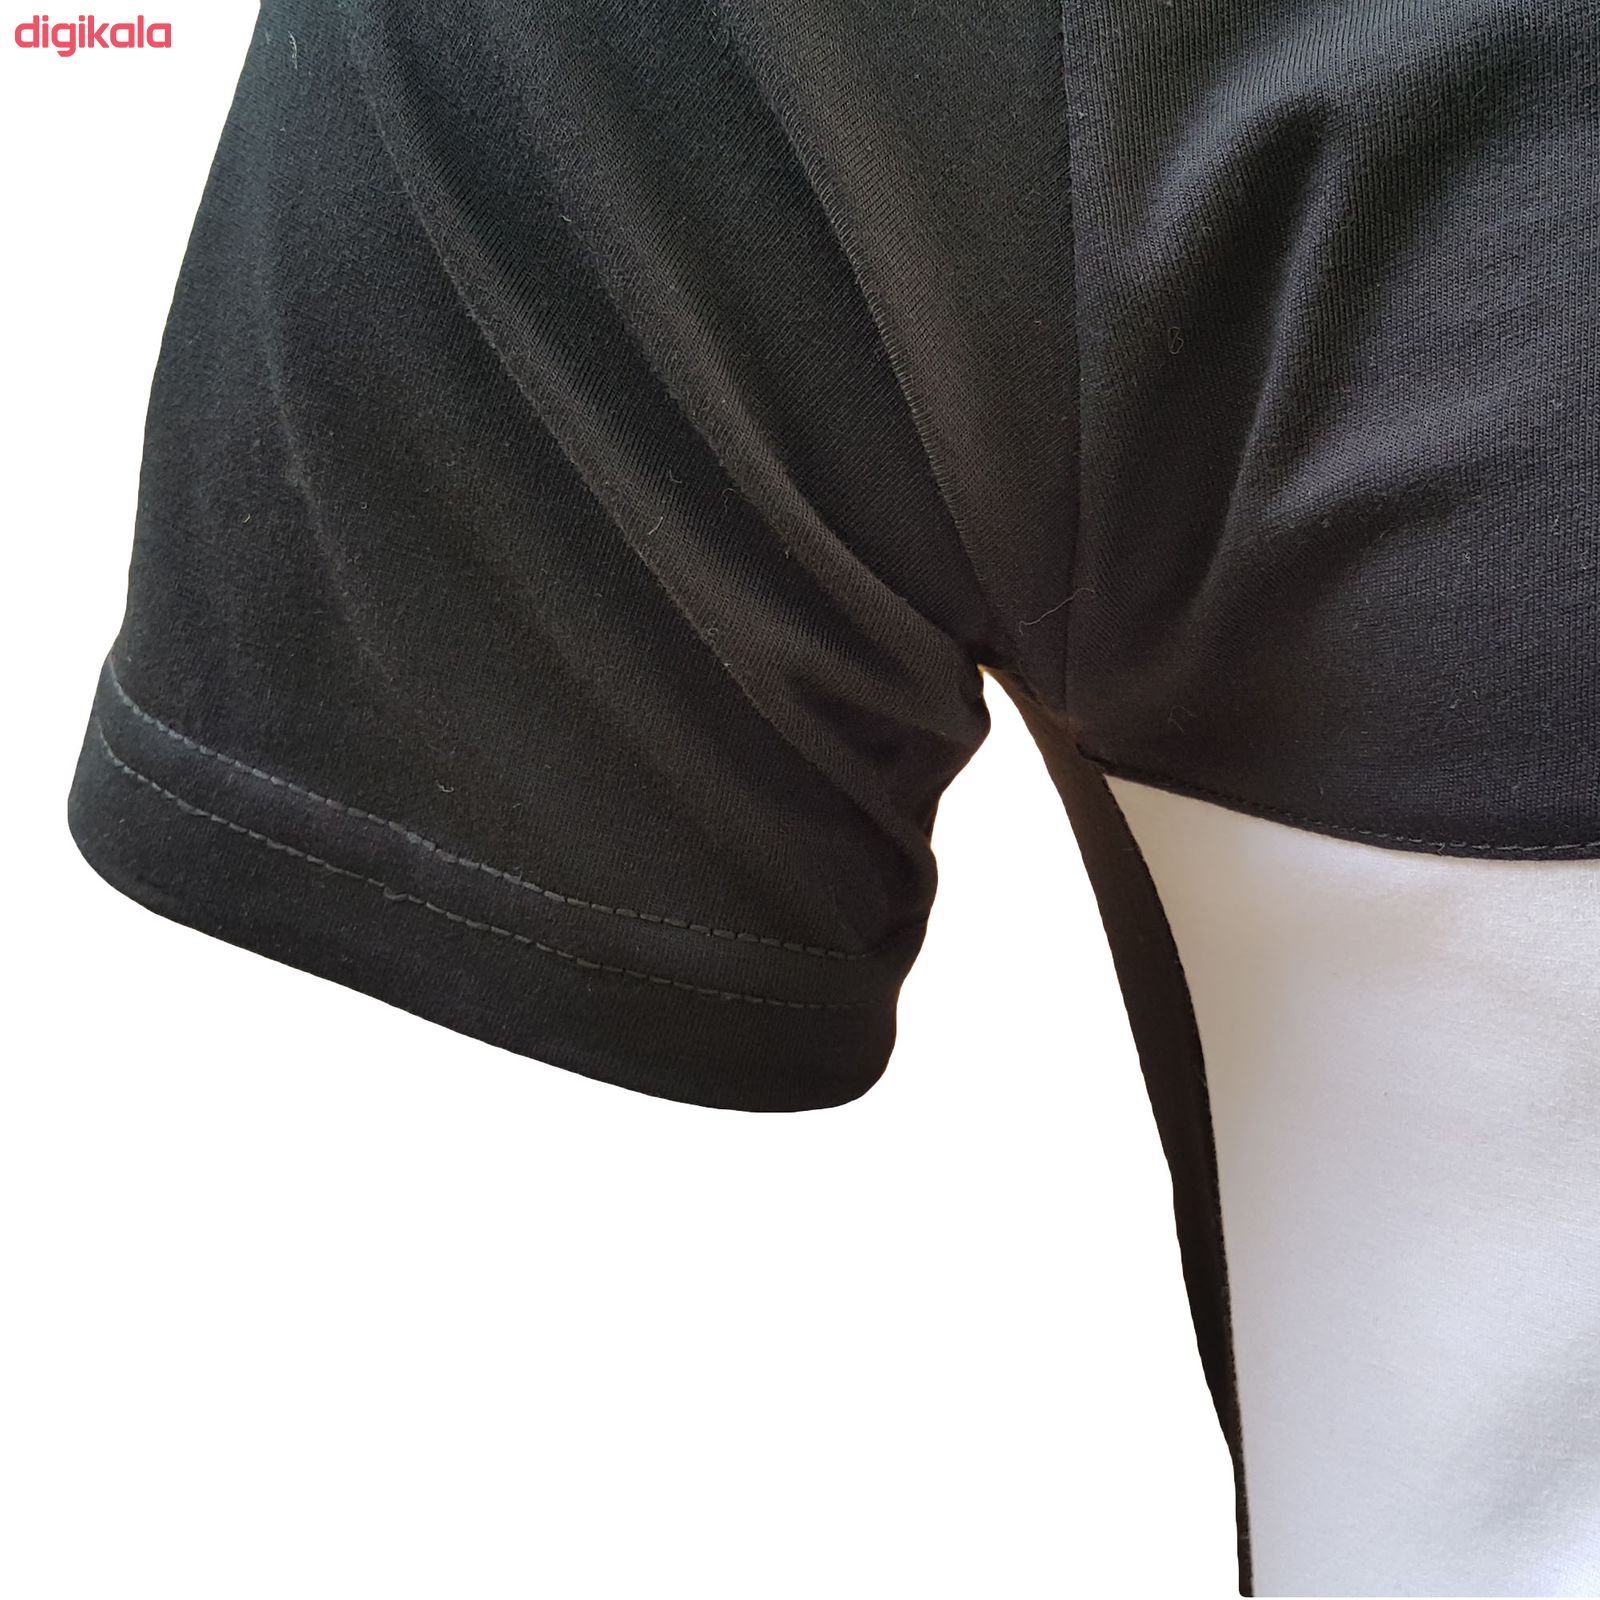  تی شرت آستین کوتاه مردانه طرح آژاکس کد A259G رنگ مشکی